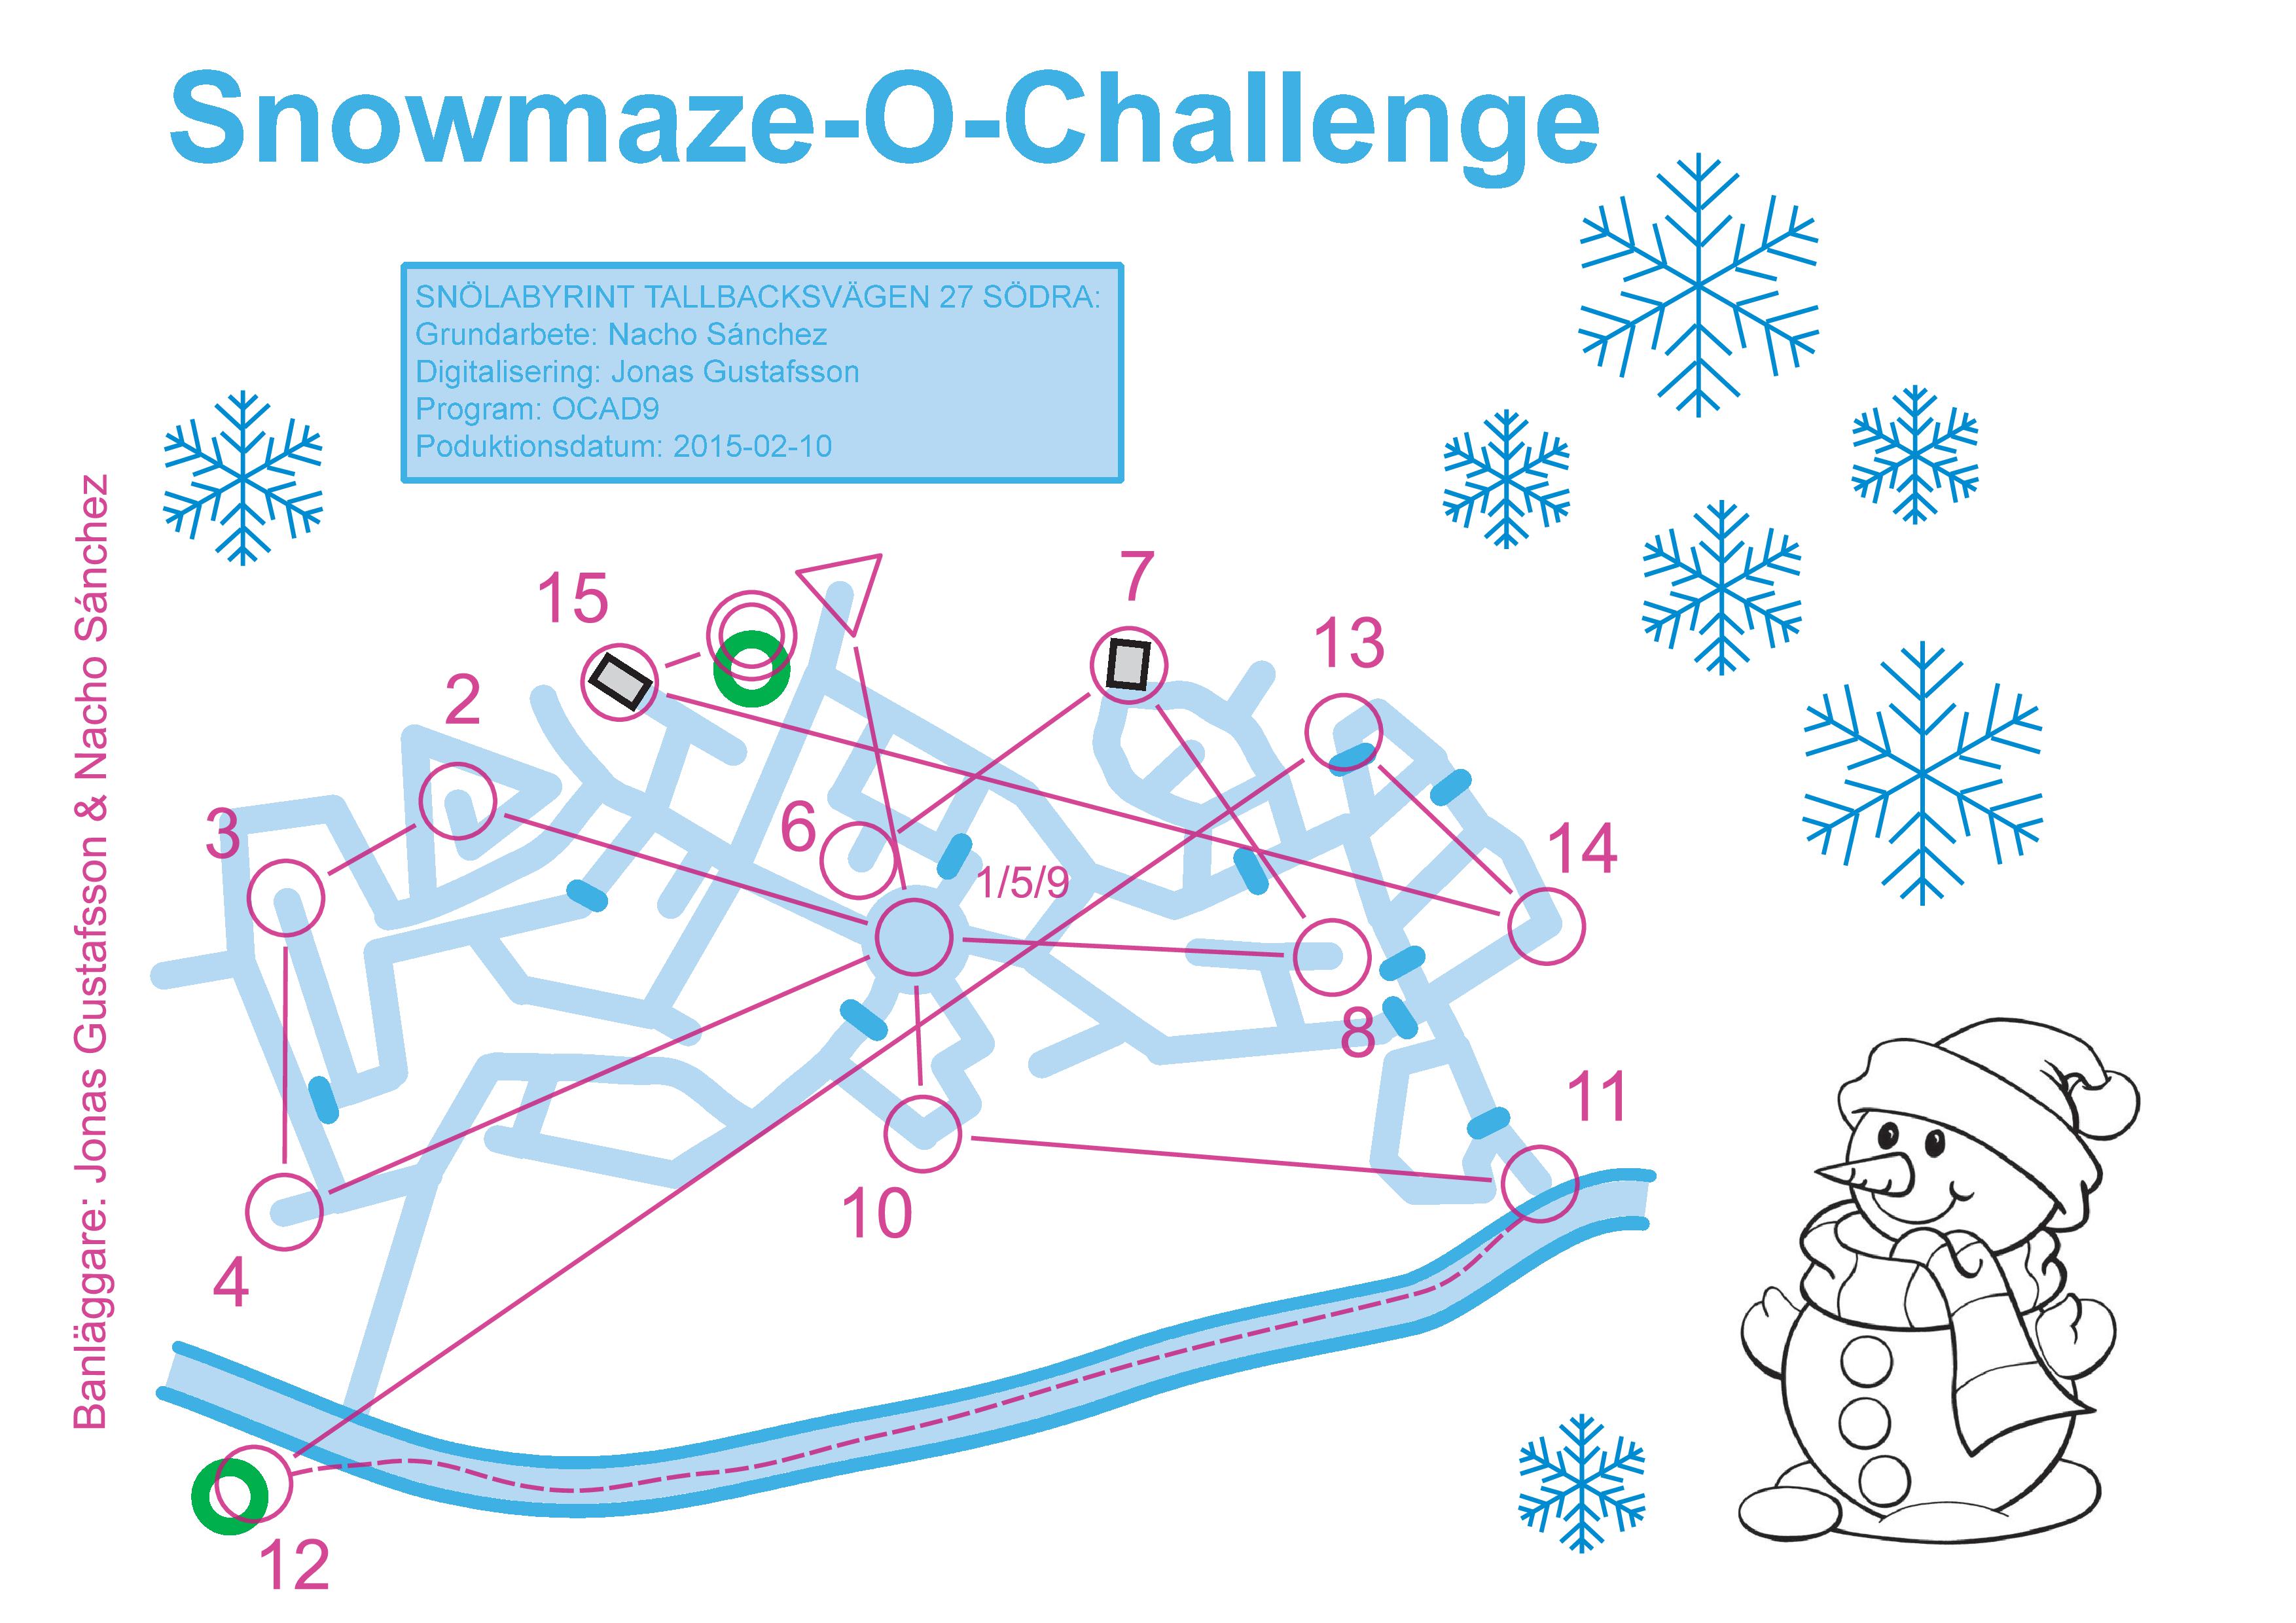 Snowmaze-O-Challenge (2015-02-11)